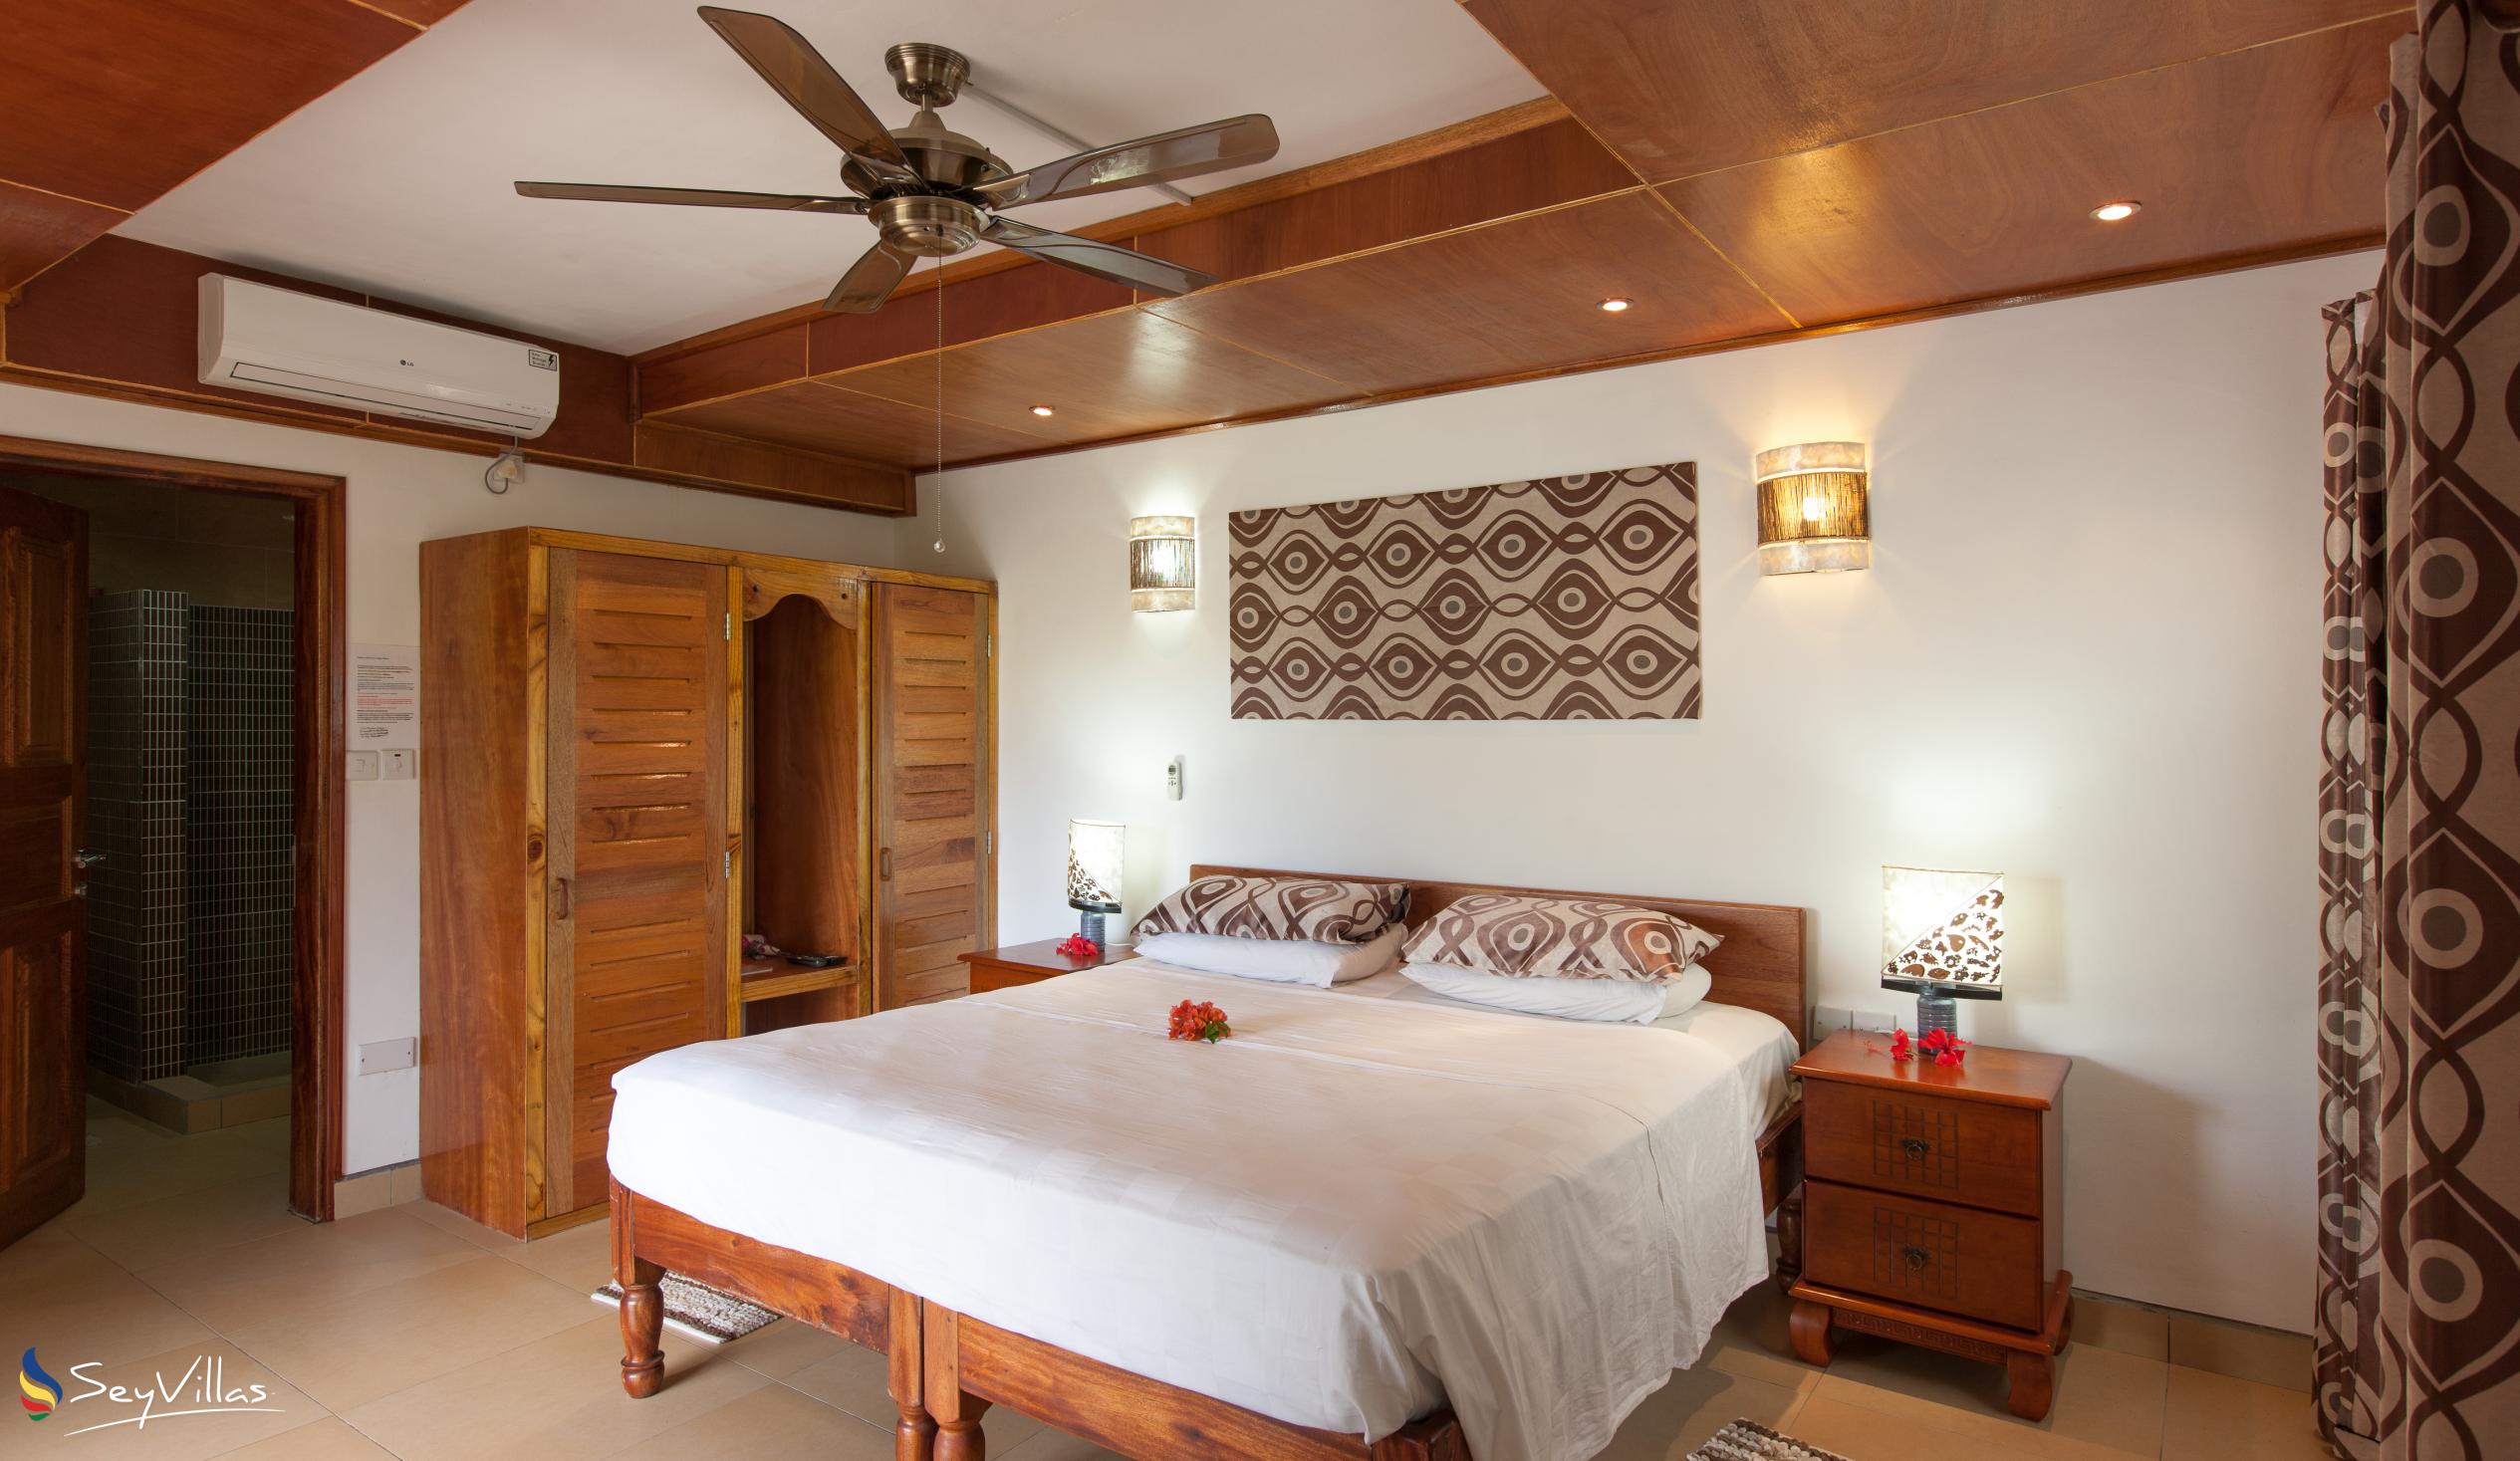 Foto 104: Sea View Lodge - Villetta su palafitte - Praslin (Seychelles)